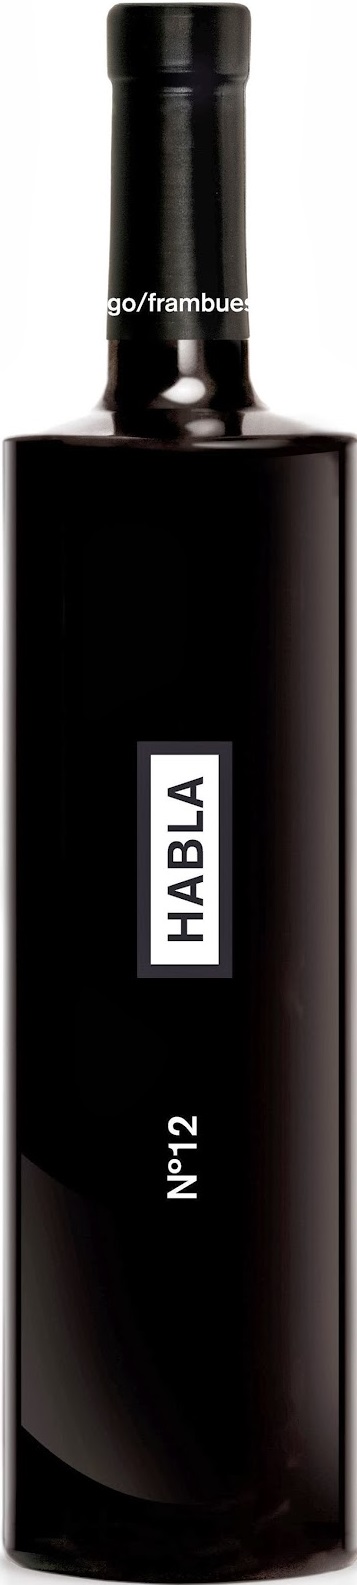 Image of Wine bottle Habla nº 12